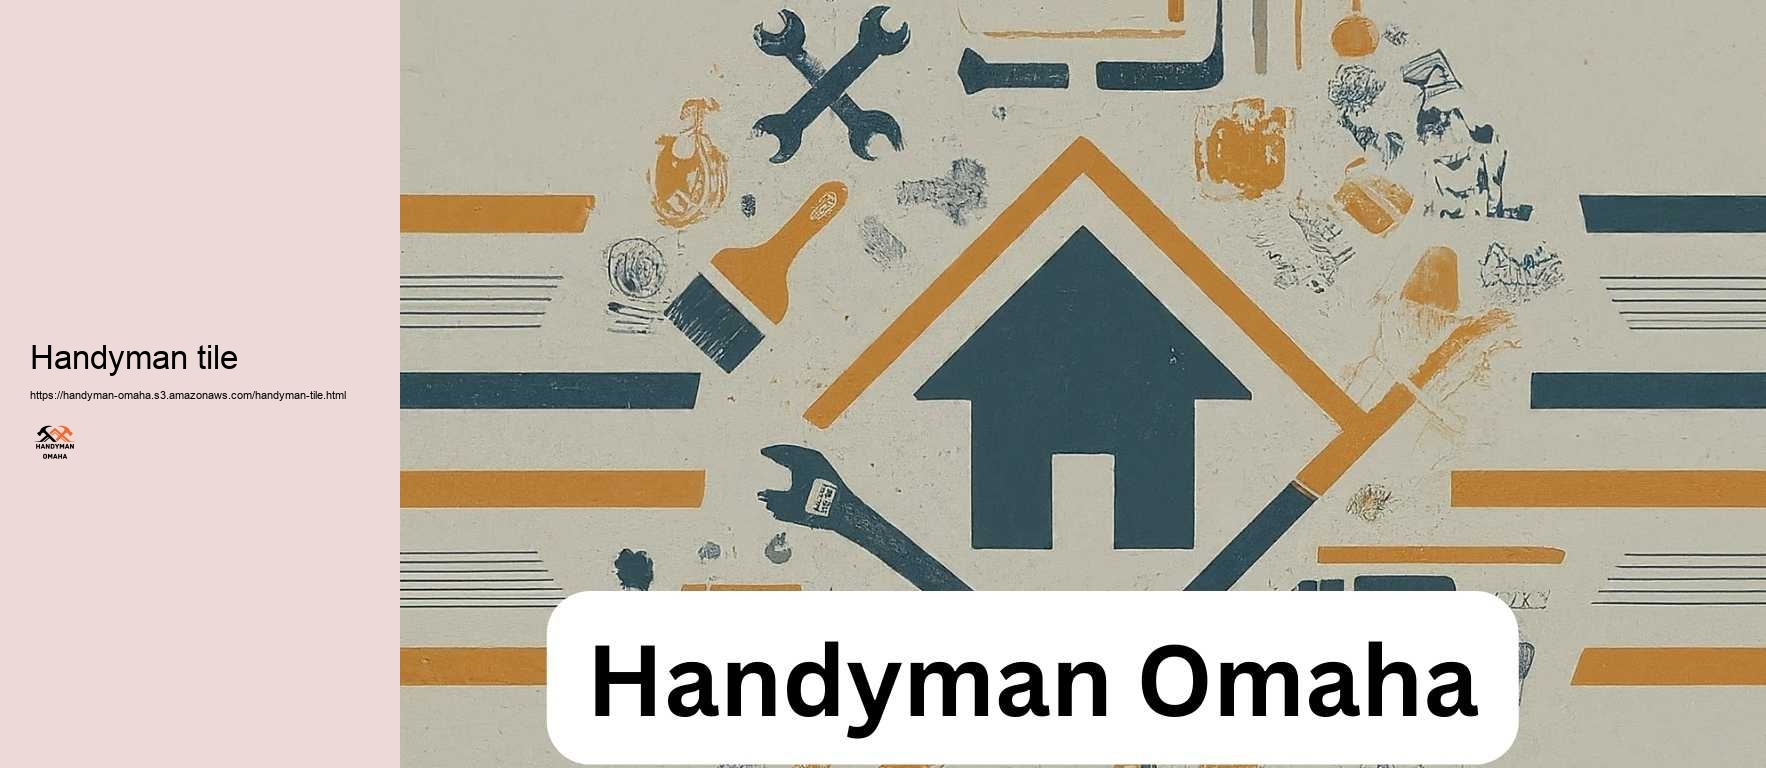 Handyman tile